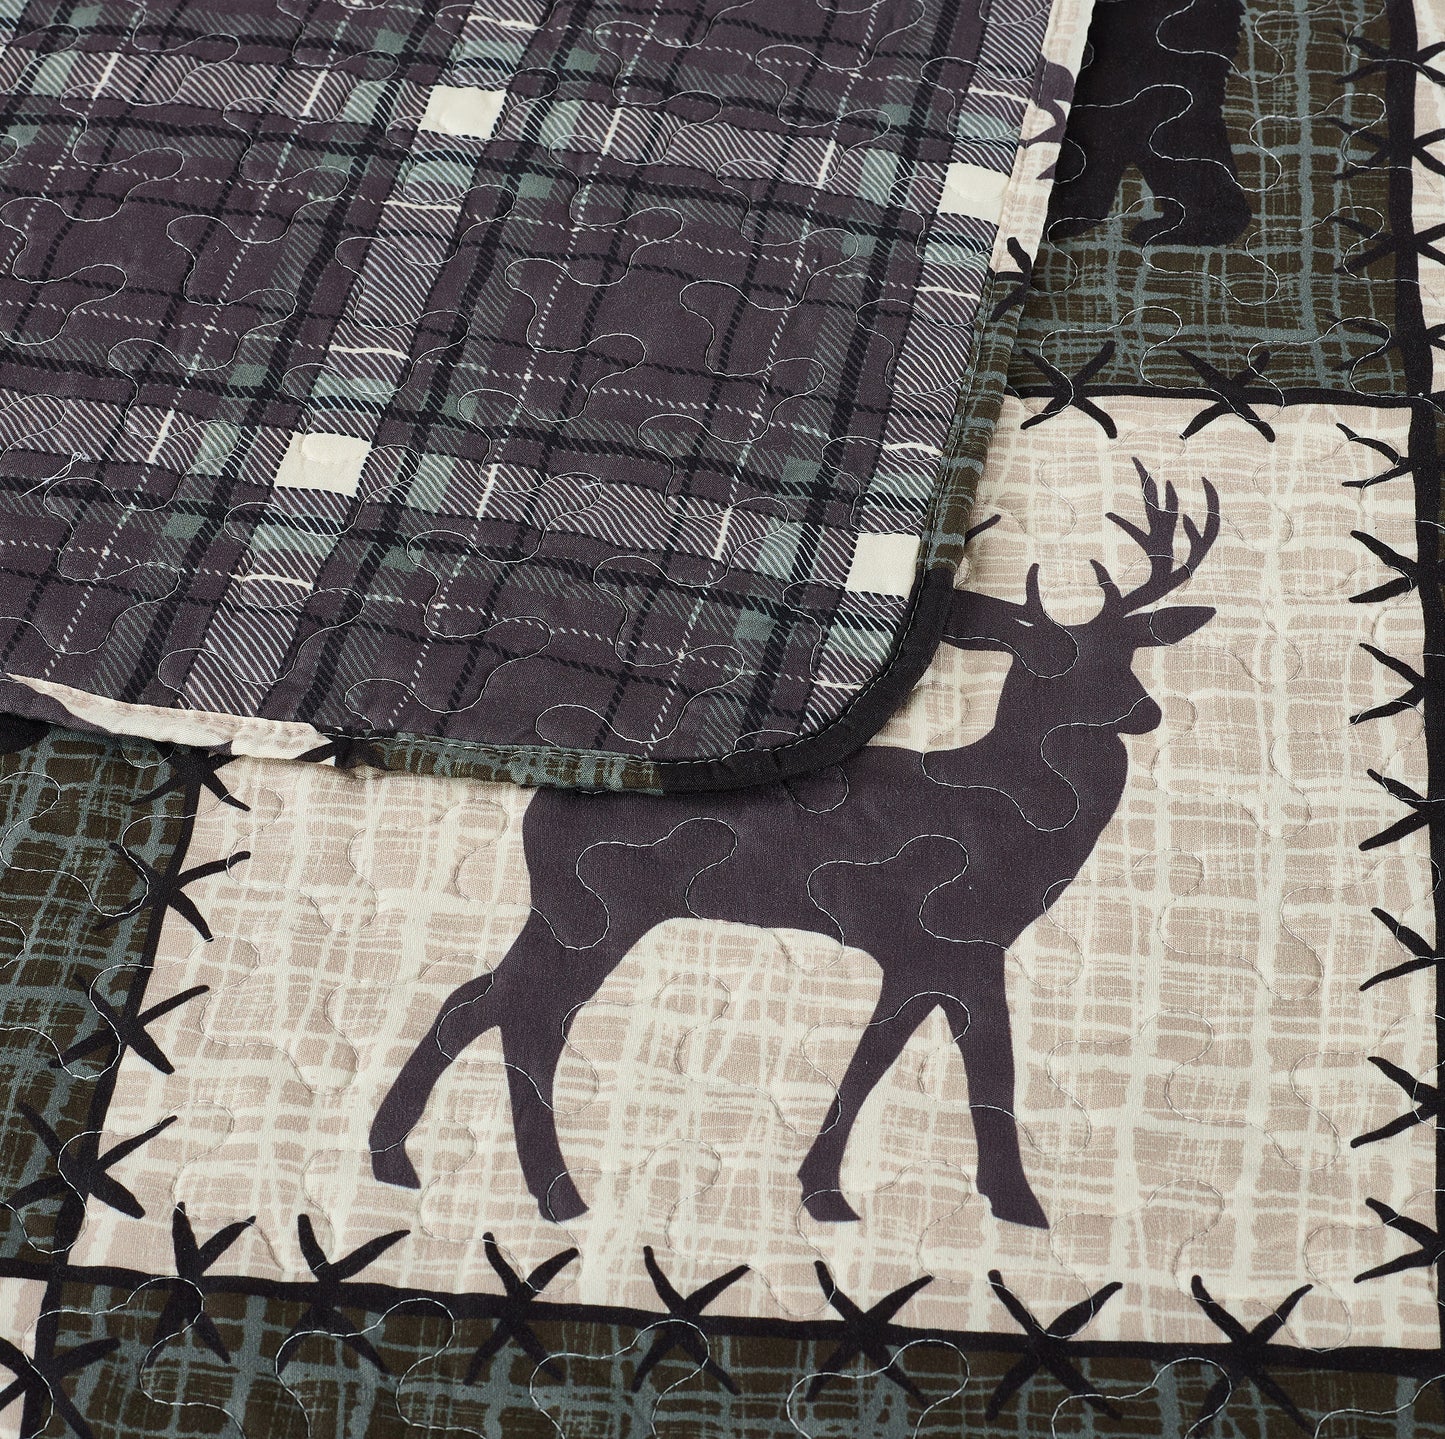 Virah Bella - Stitched Forest Verdant - Lightweight Reversible Quilt Set with Decorative Pillow Shams